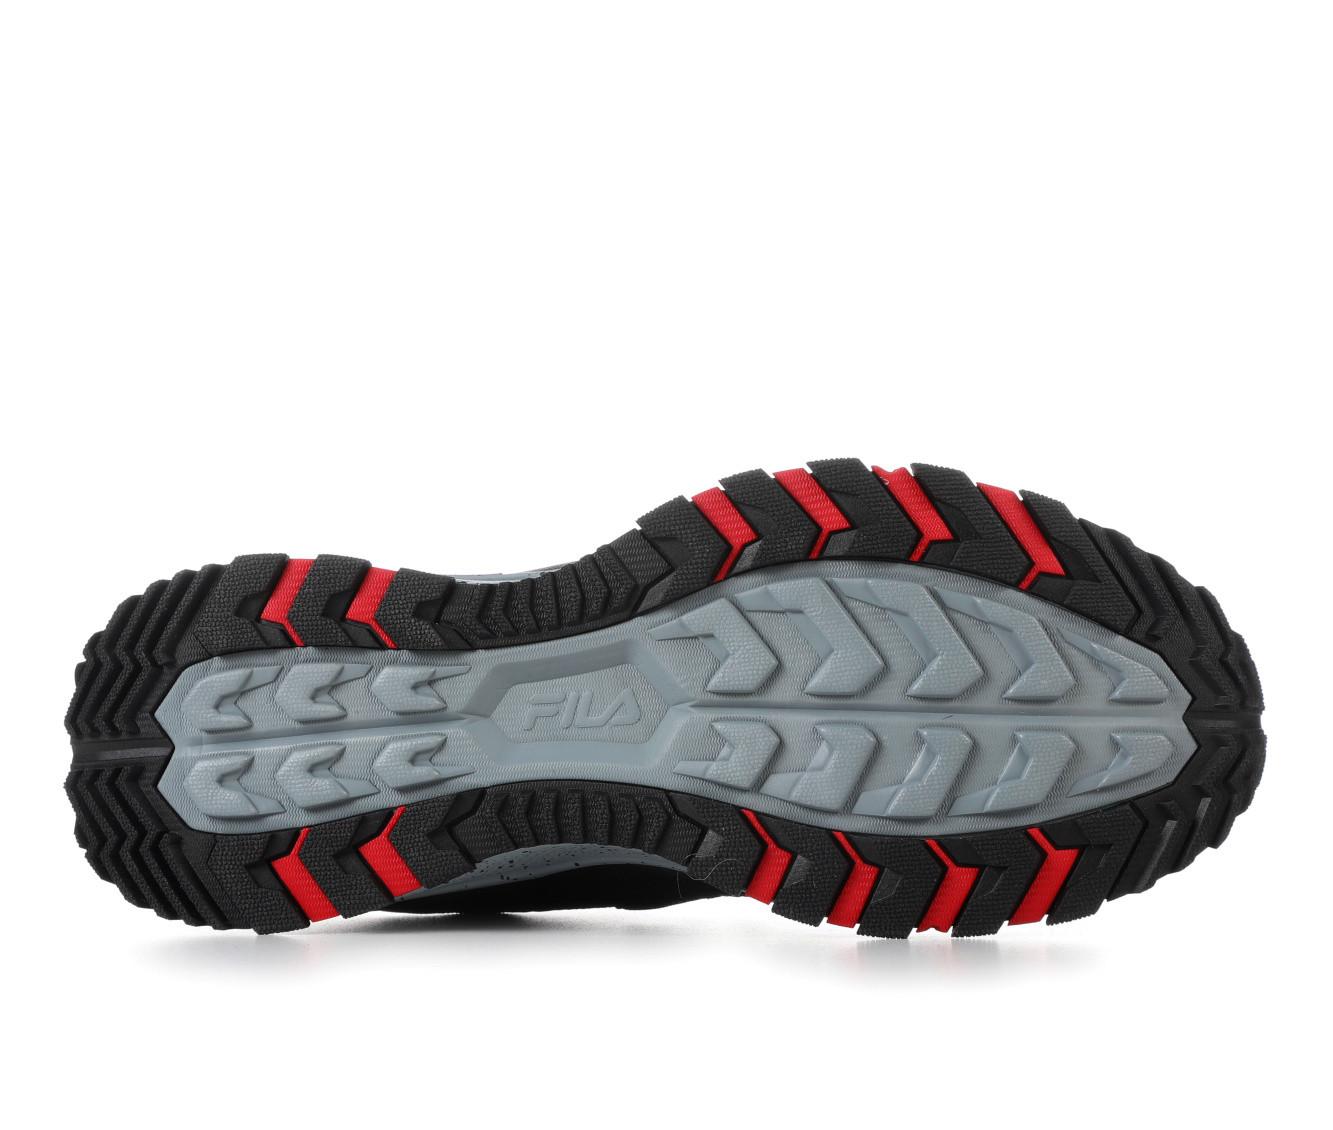 Men's Fila Firetrail Evo Trail Running Shoes